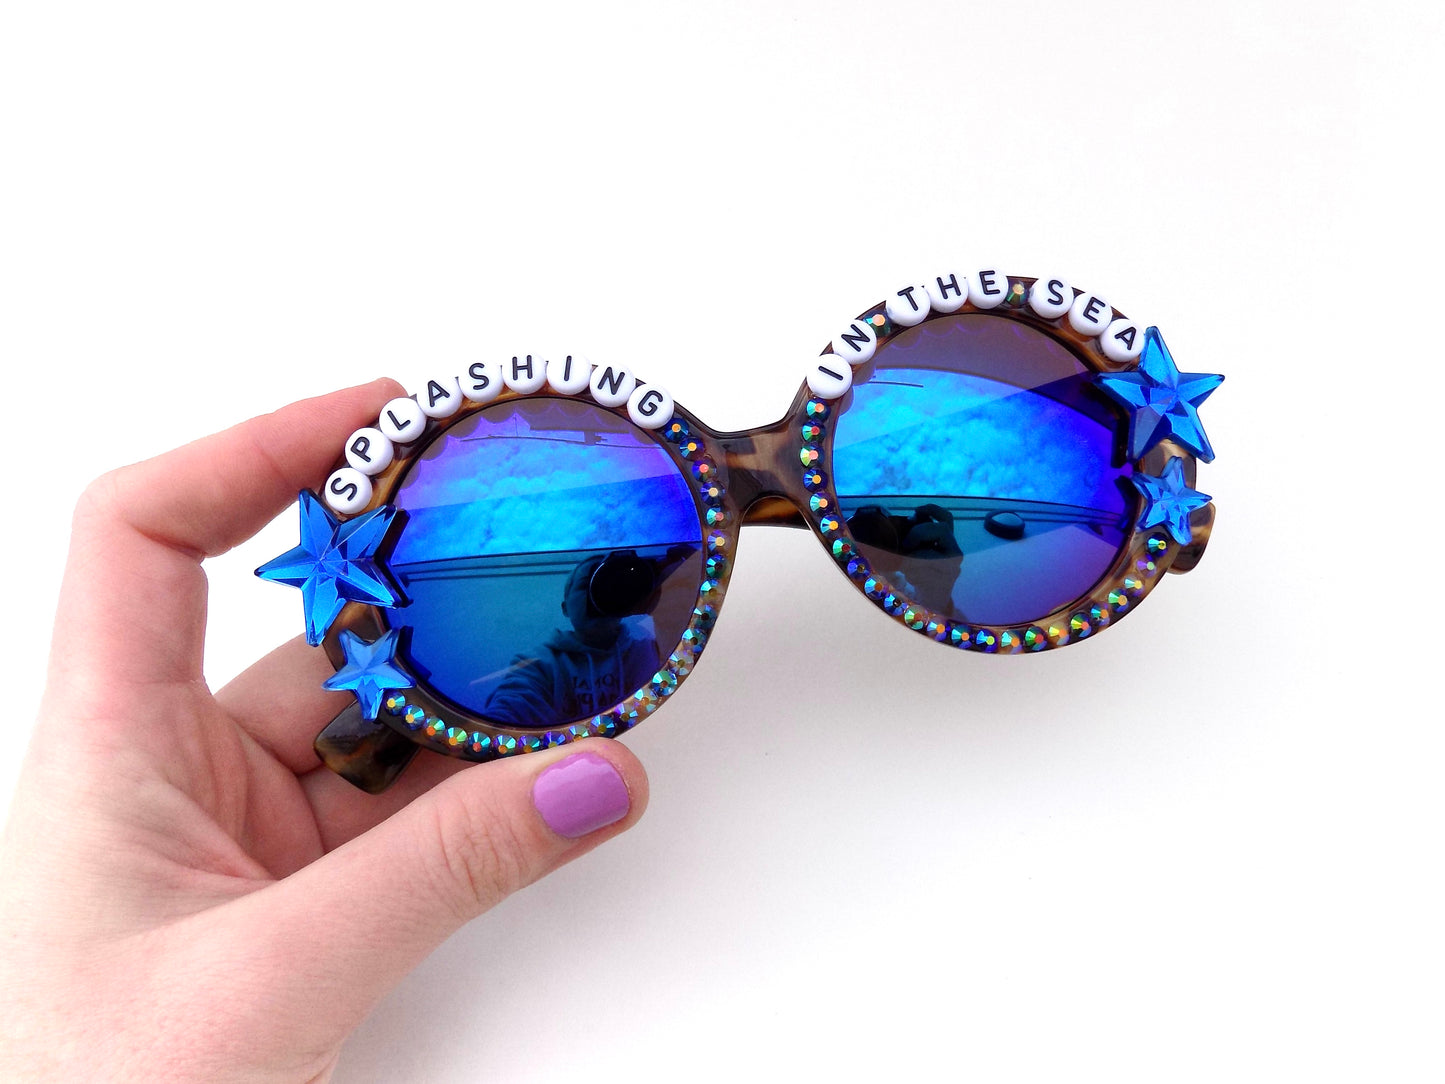 Phish ~ SPLASHING IN THE SEA oversized oval sunglasses